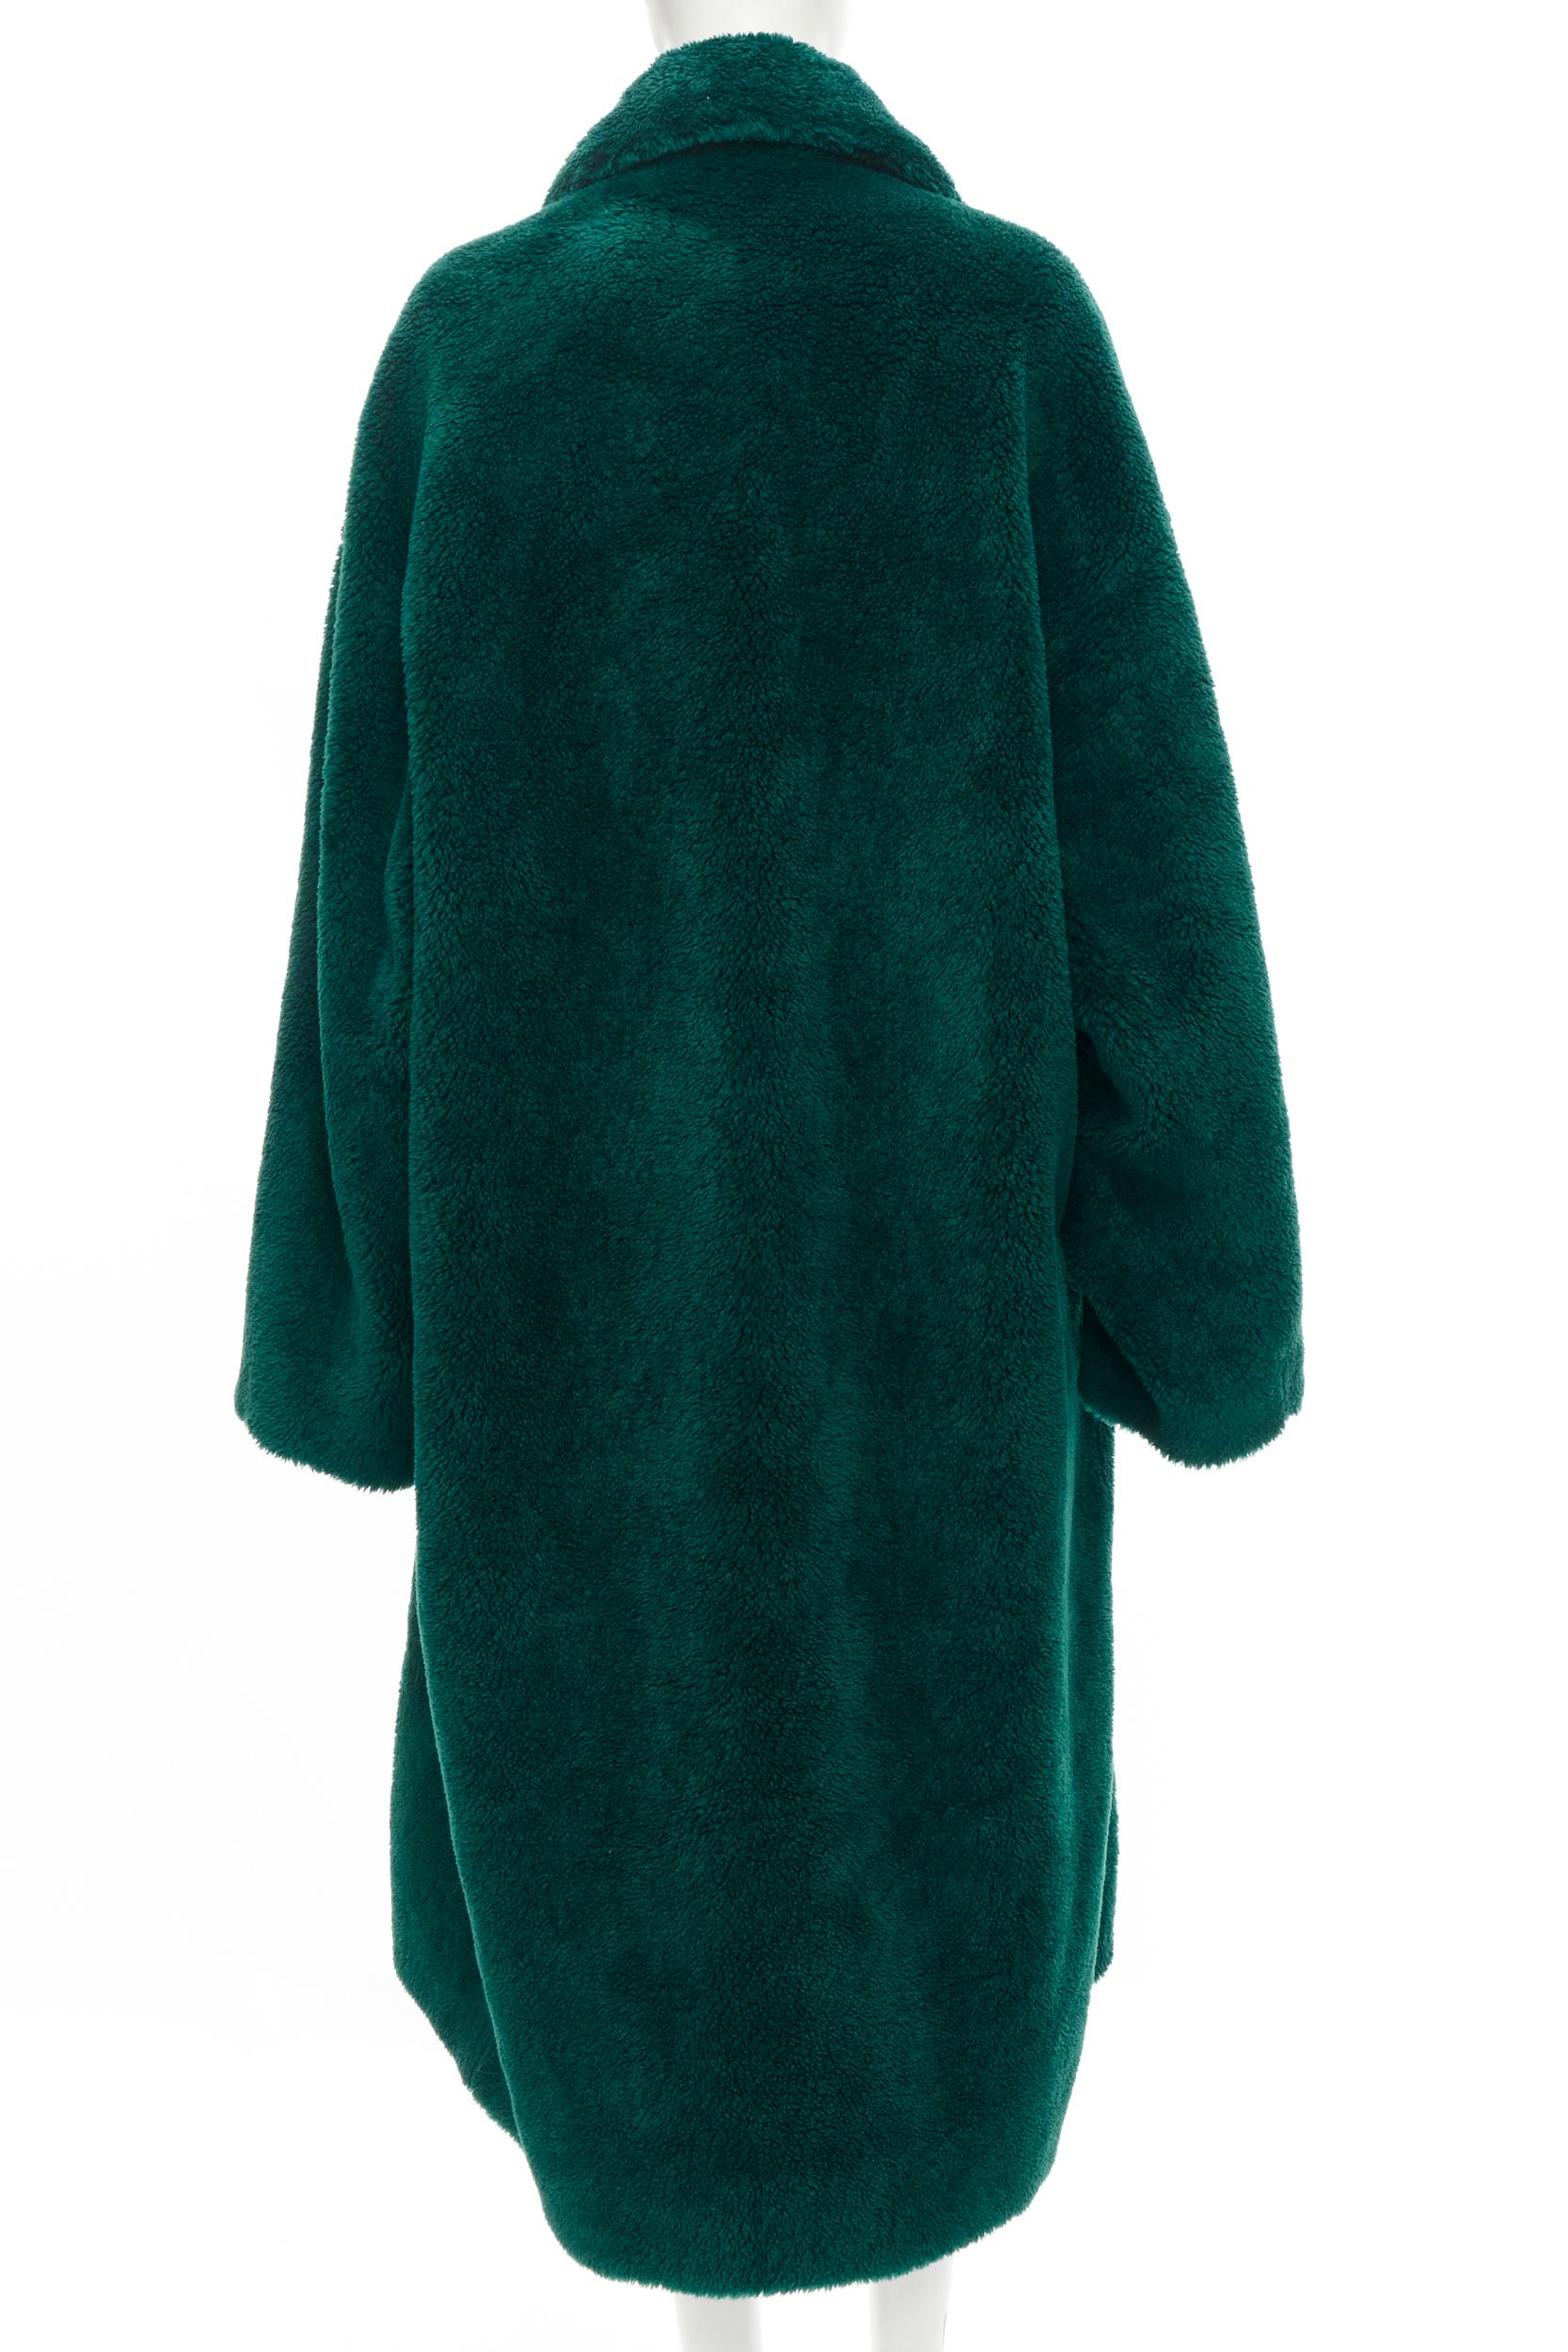 Black new BALENCIAGA Demna 2019 Runway green fluffy plush fur oversized coat FR36 S